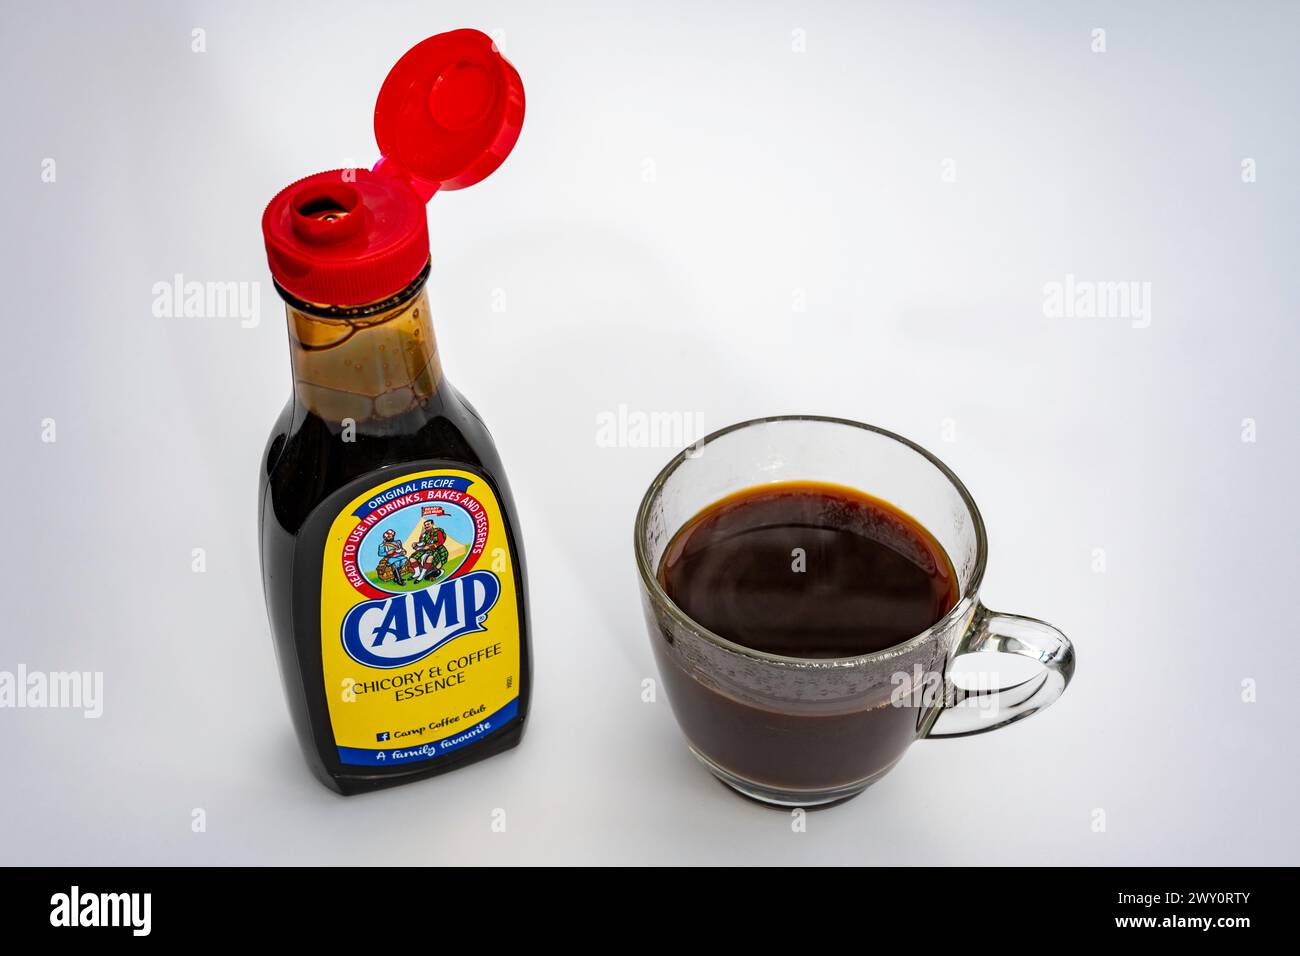 Camp chicory and coffee essence Stock Photo